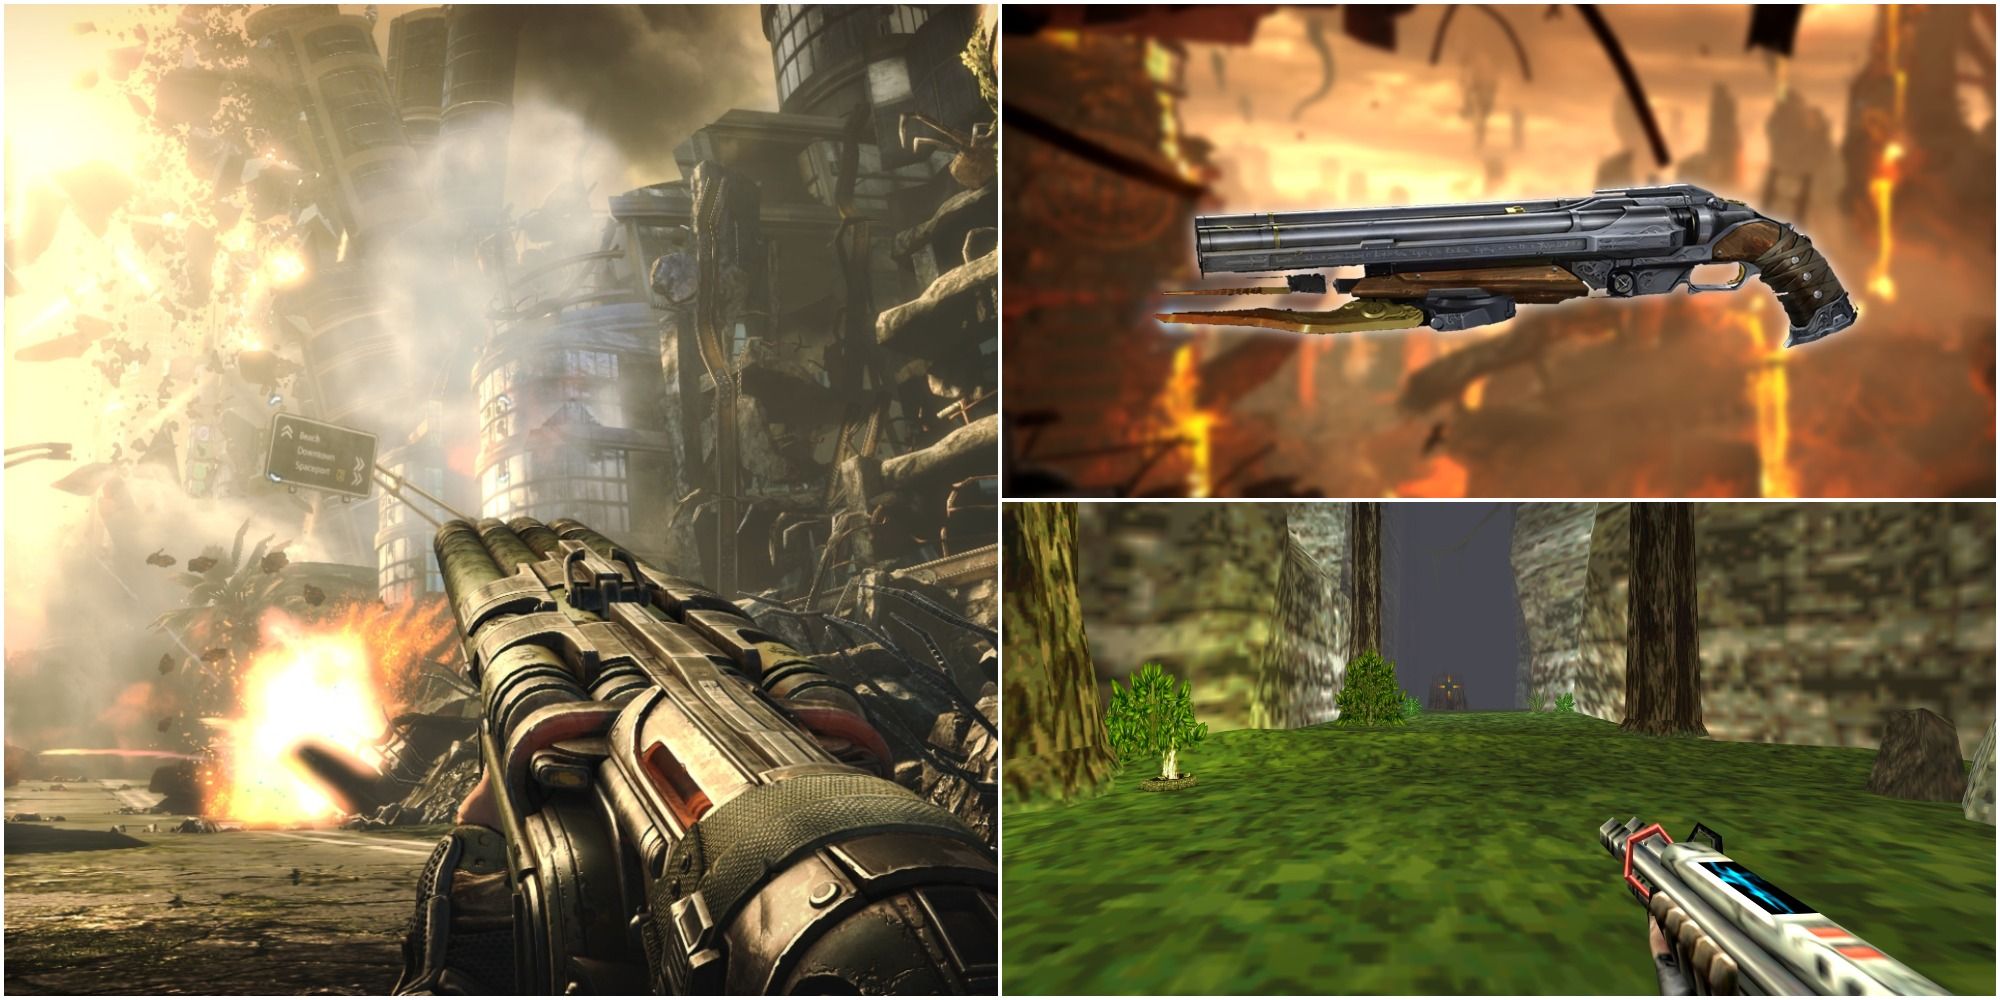 Shotguns In Videogames Ranked: Weapons Shown Bonduster, Super Shotgun, The Shredder